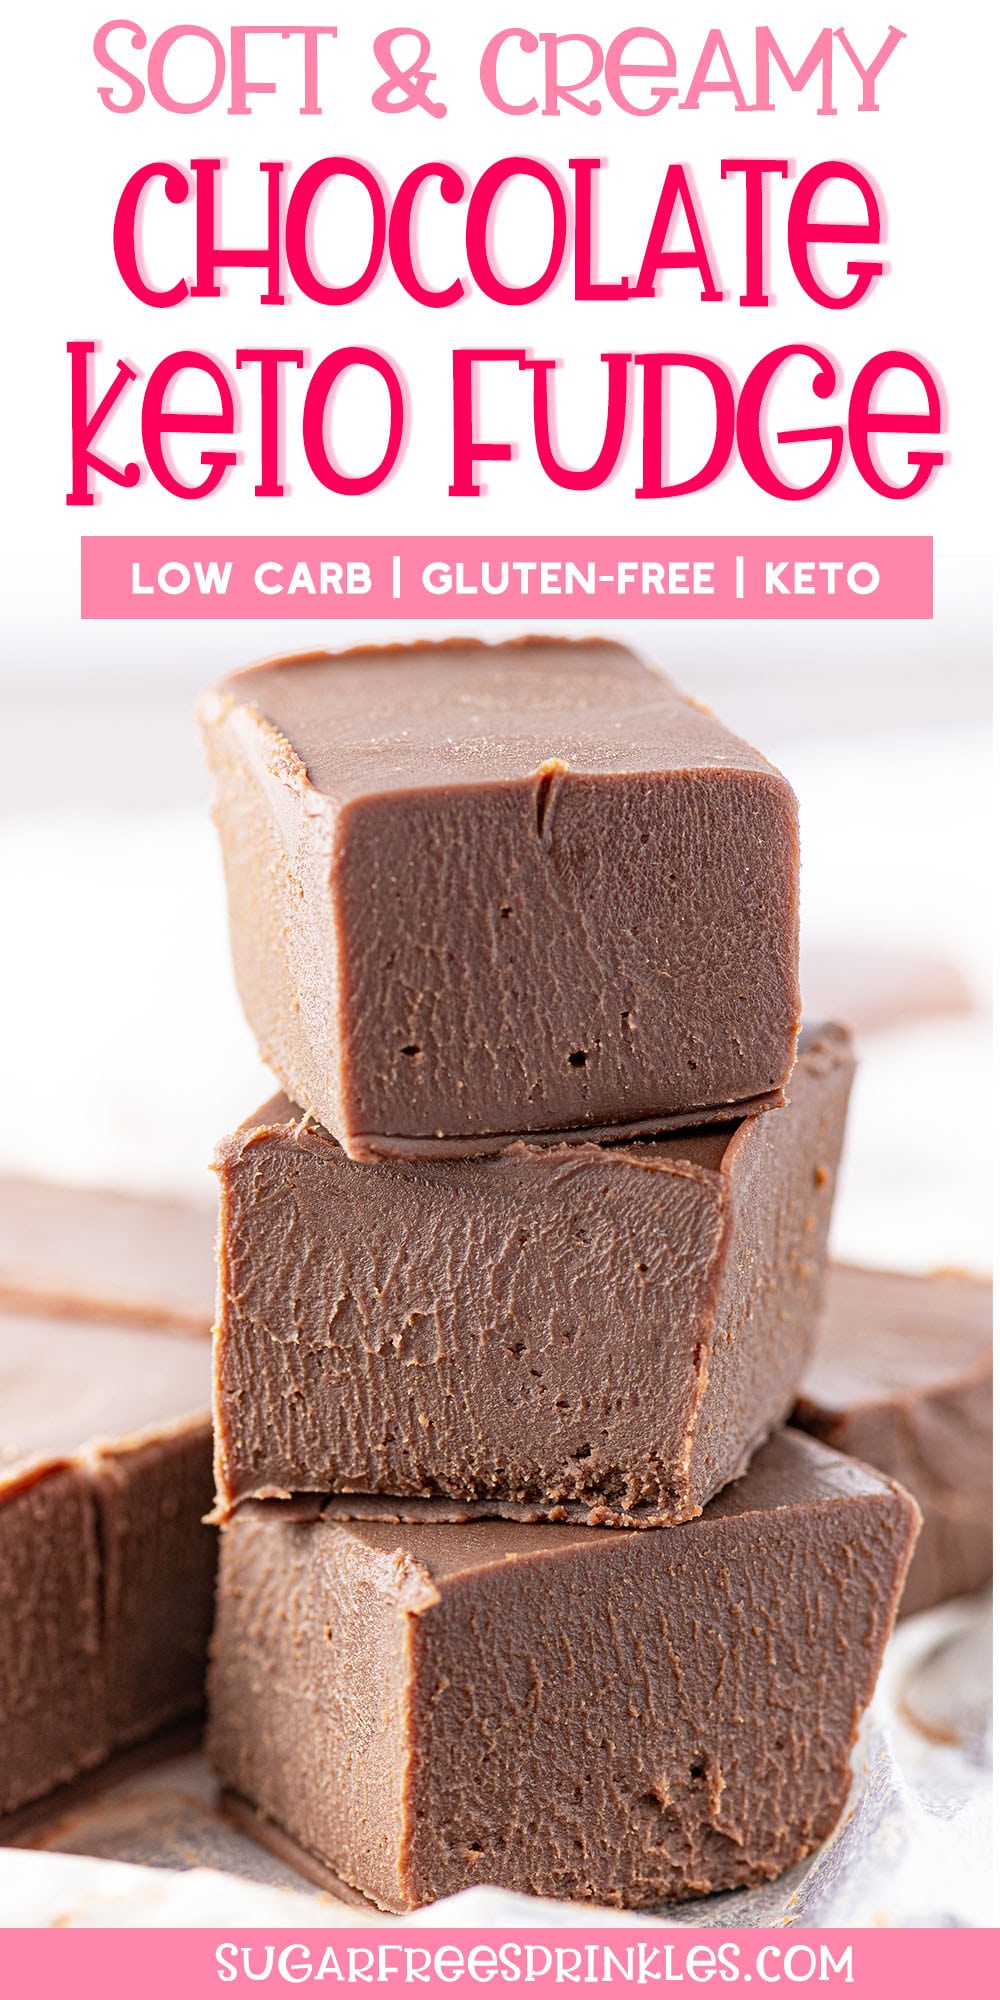 Keto Fudge Recipe: Easy, Low Carb Chocolate Fudge!